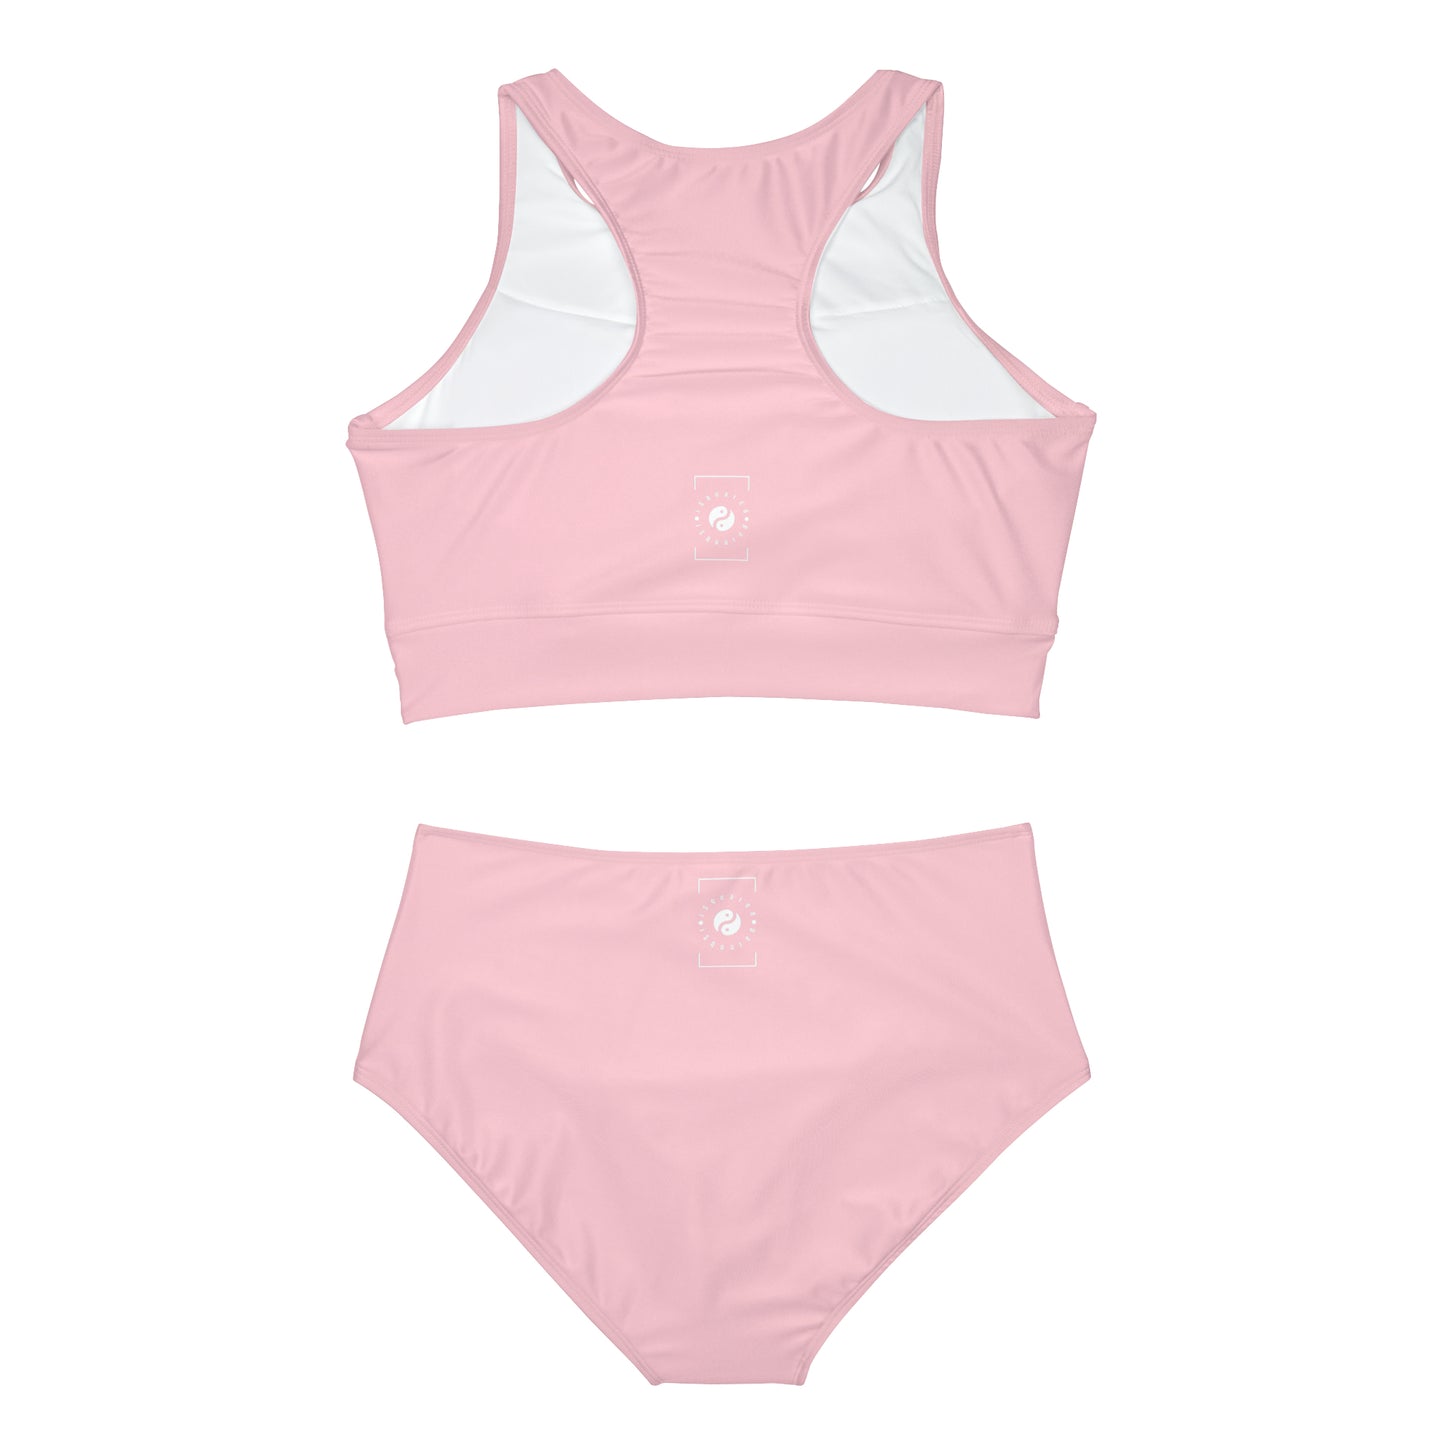 FFCCD4 Light Pink - Hot Yoga Bikini Set